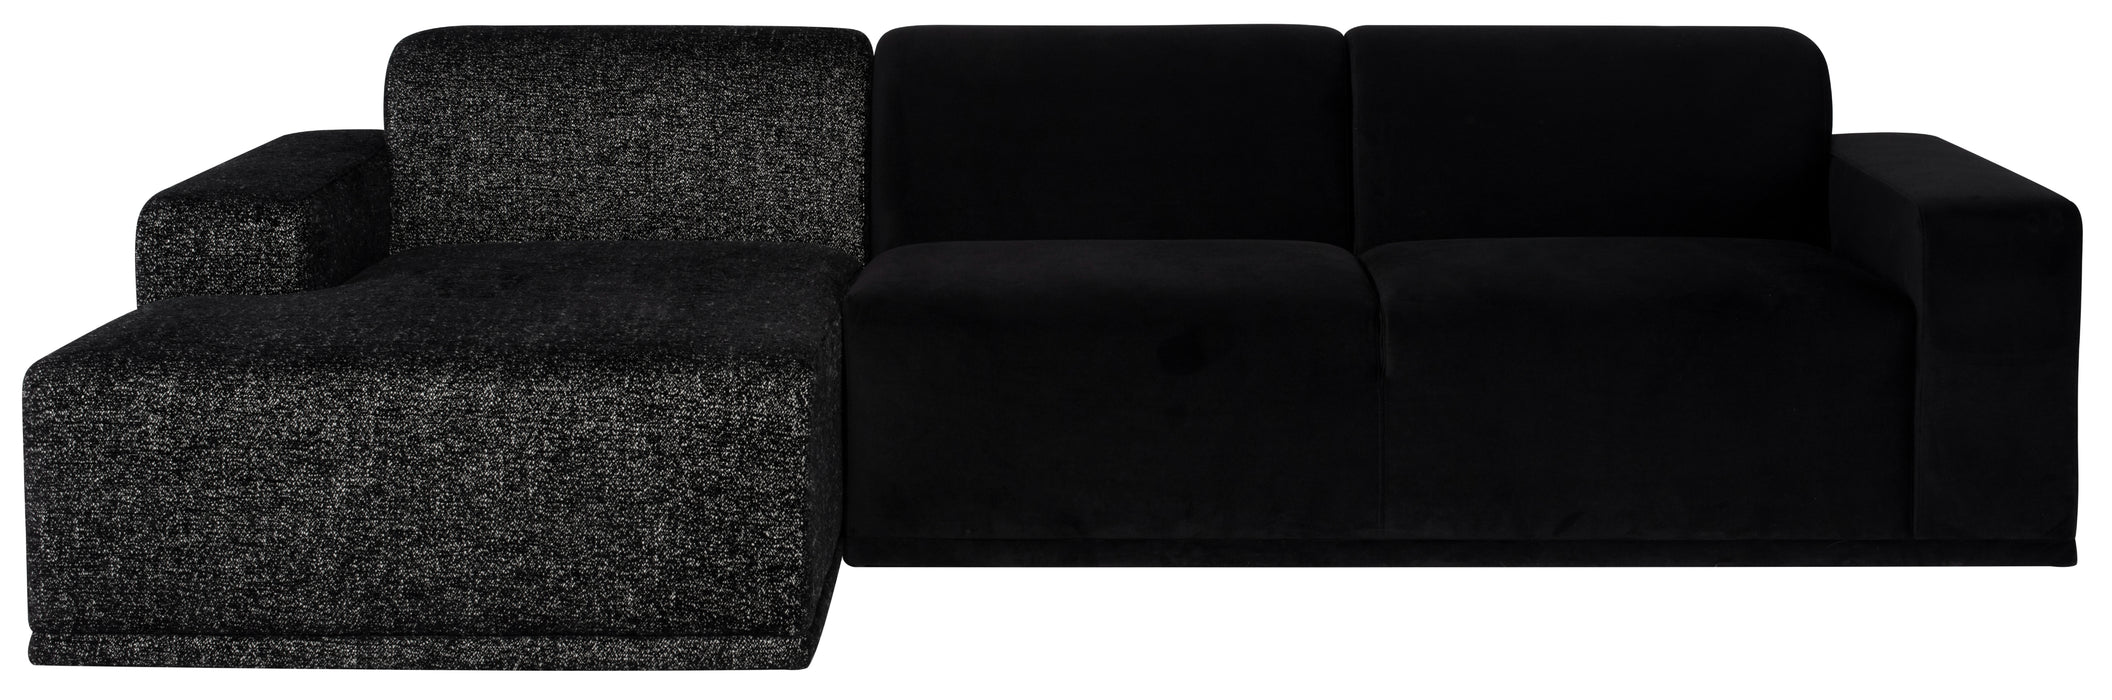 Leo NL Black Sectional Sofa